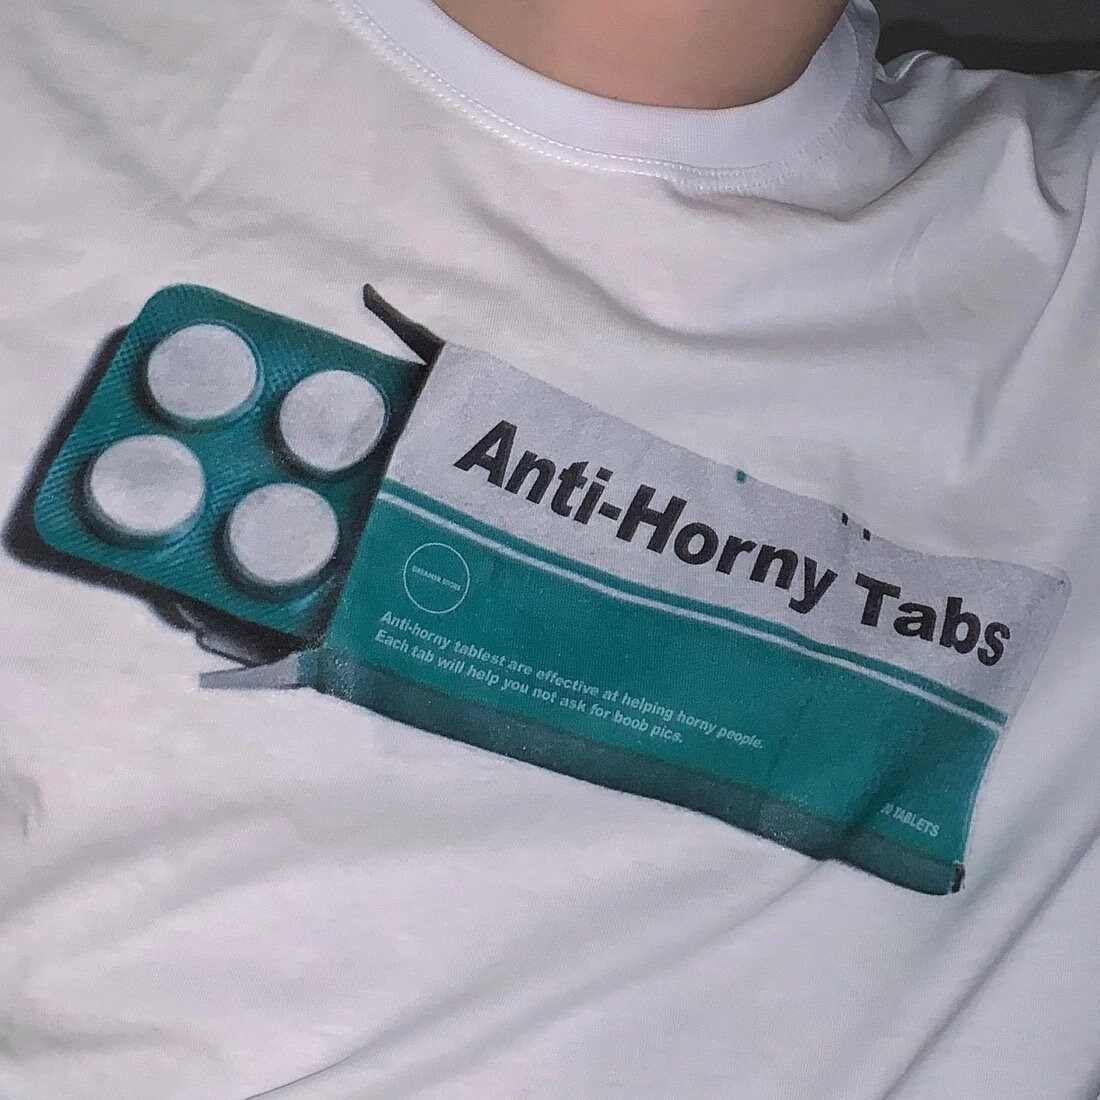 Antihorny tablet